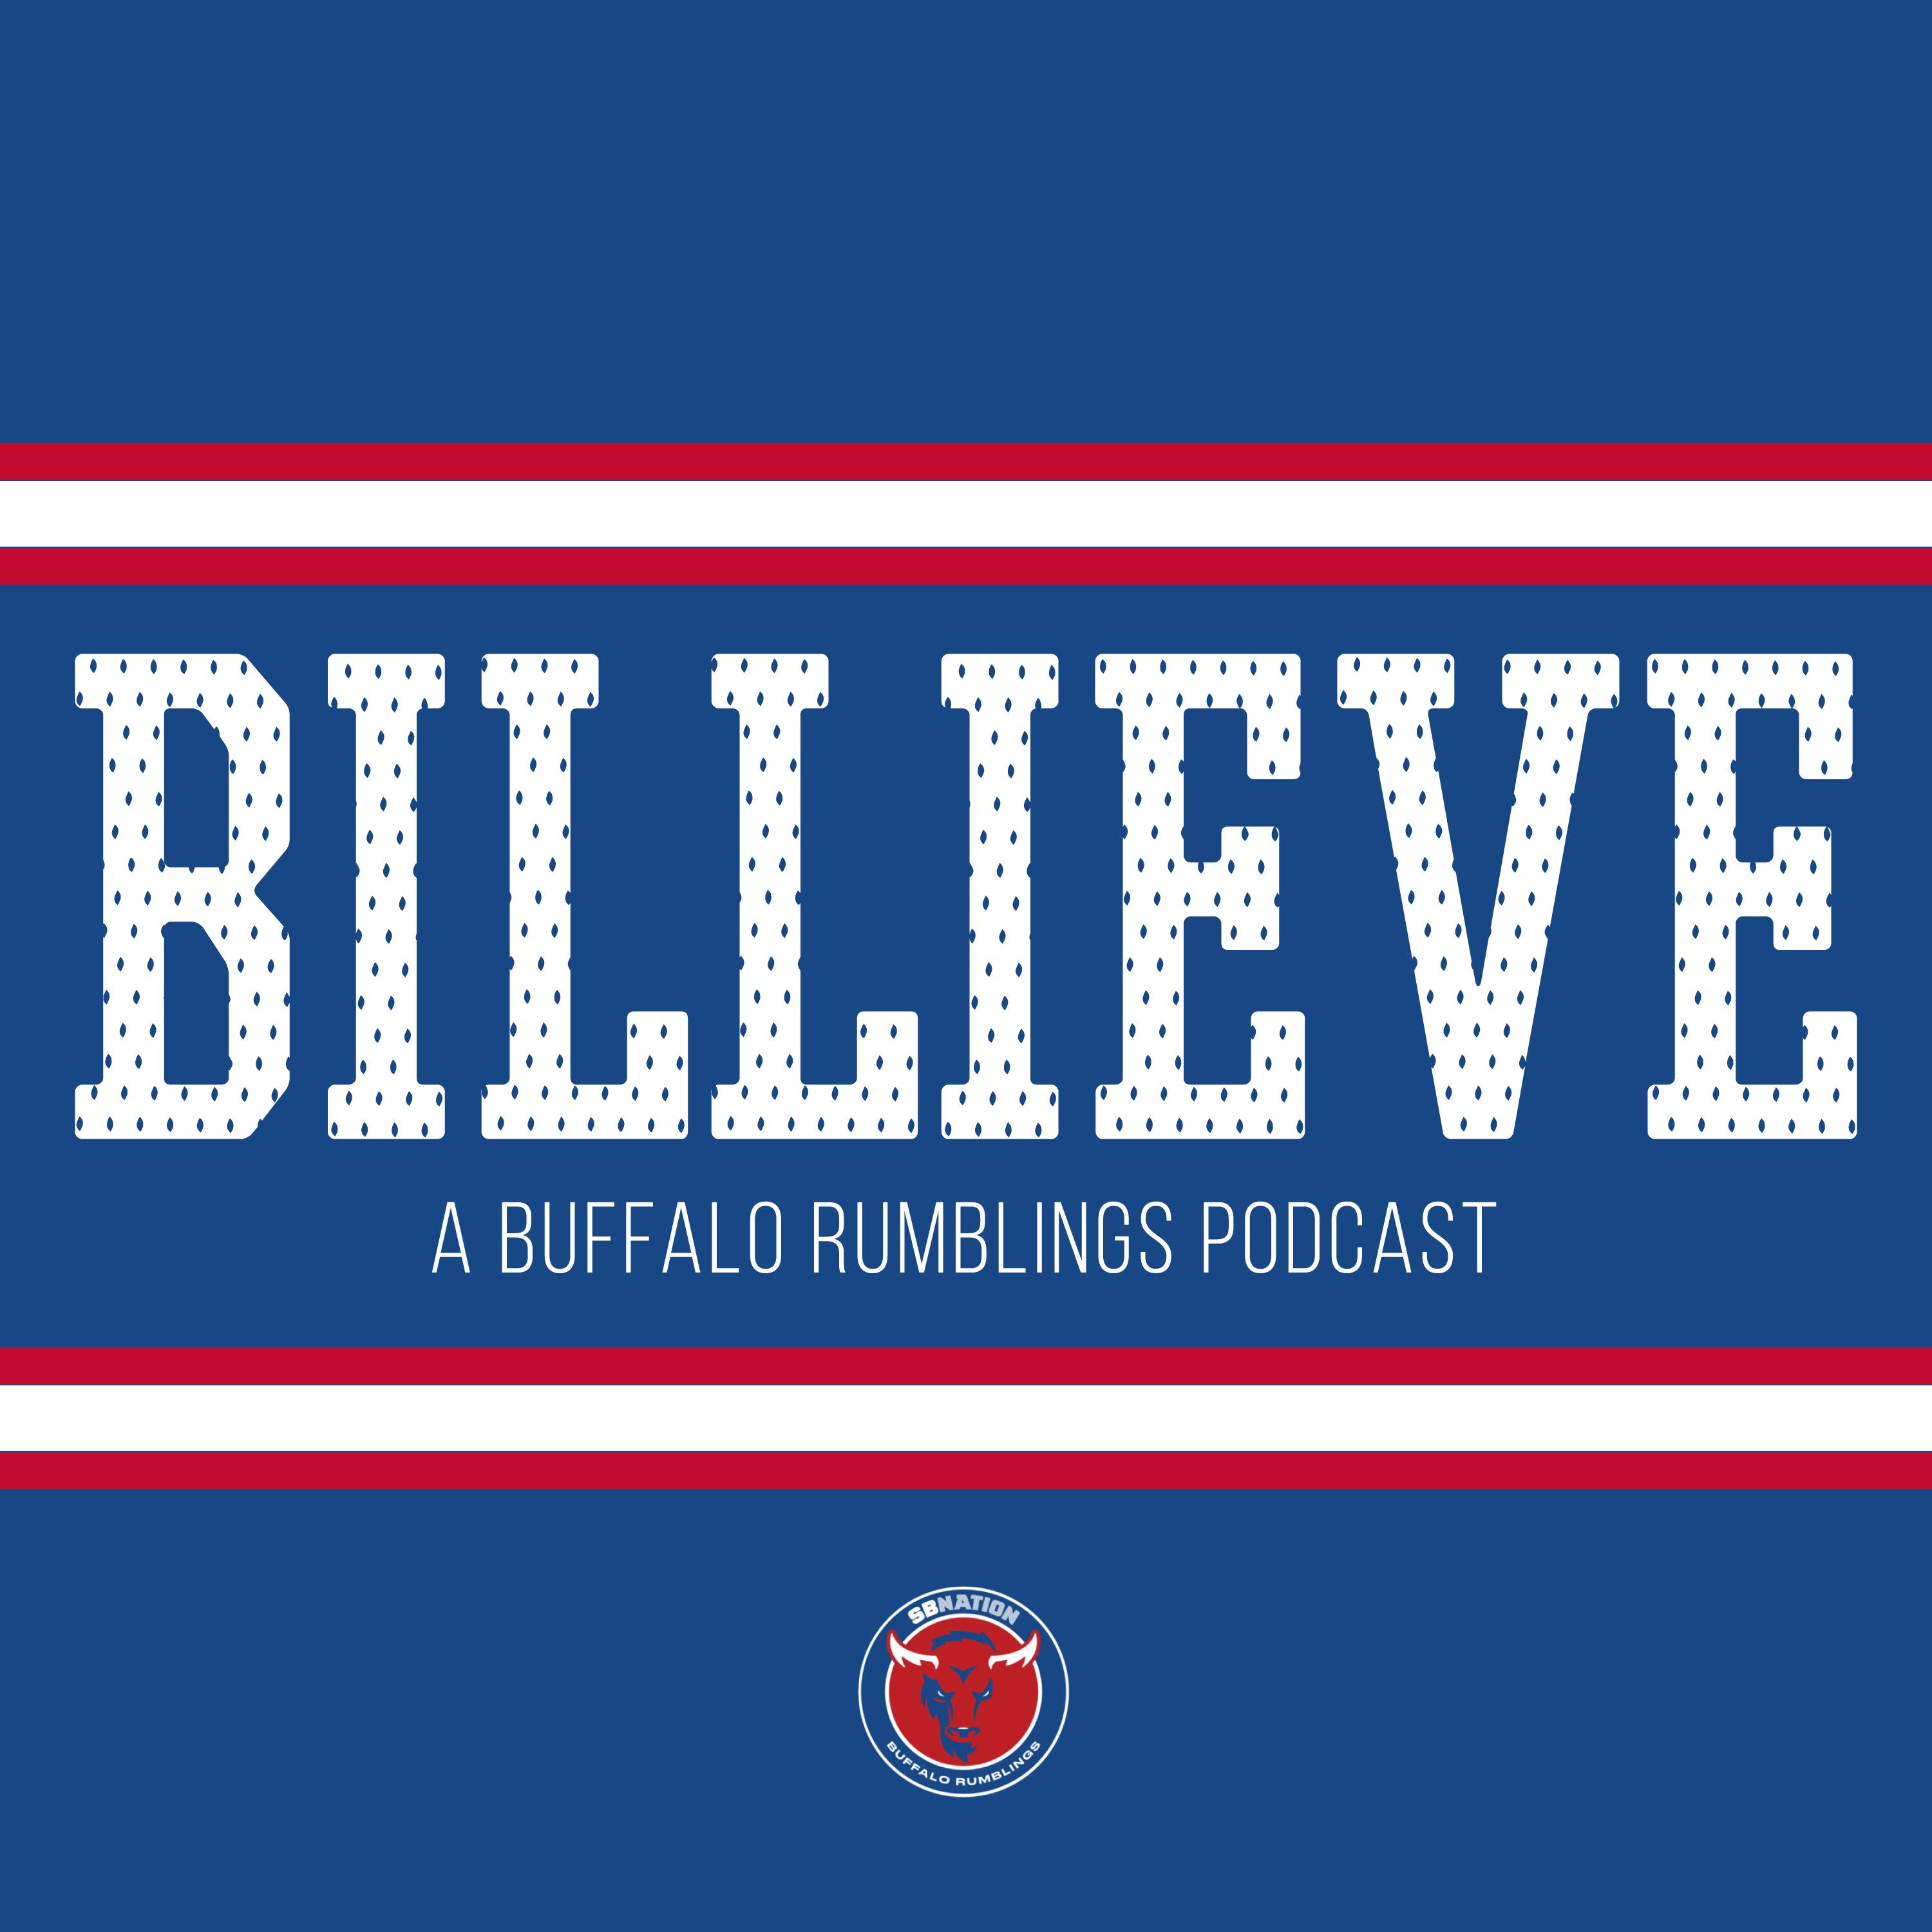 Billieve: Buffalo's strengths and weaknesses on display vs. Washington